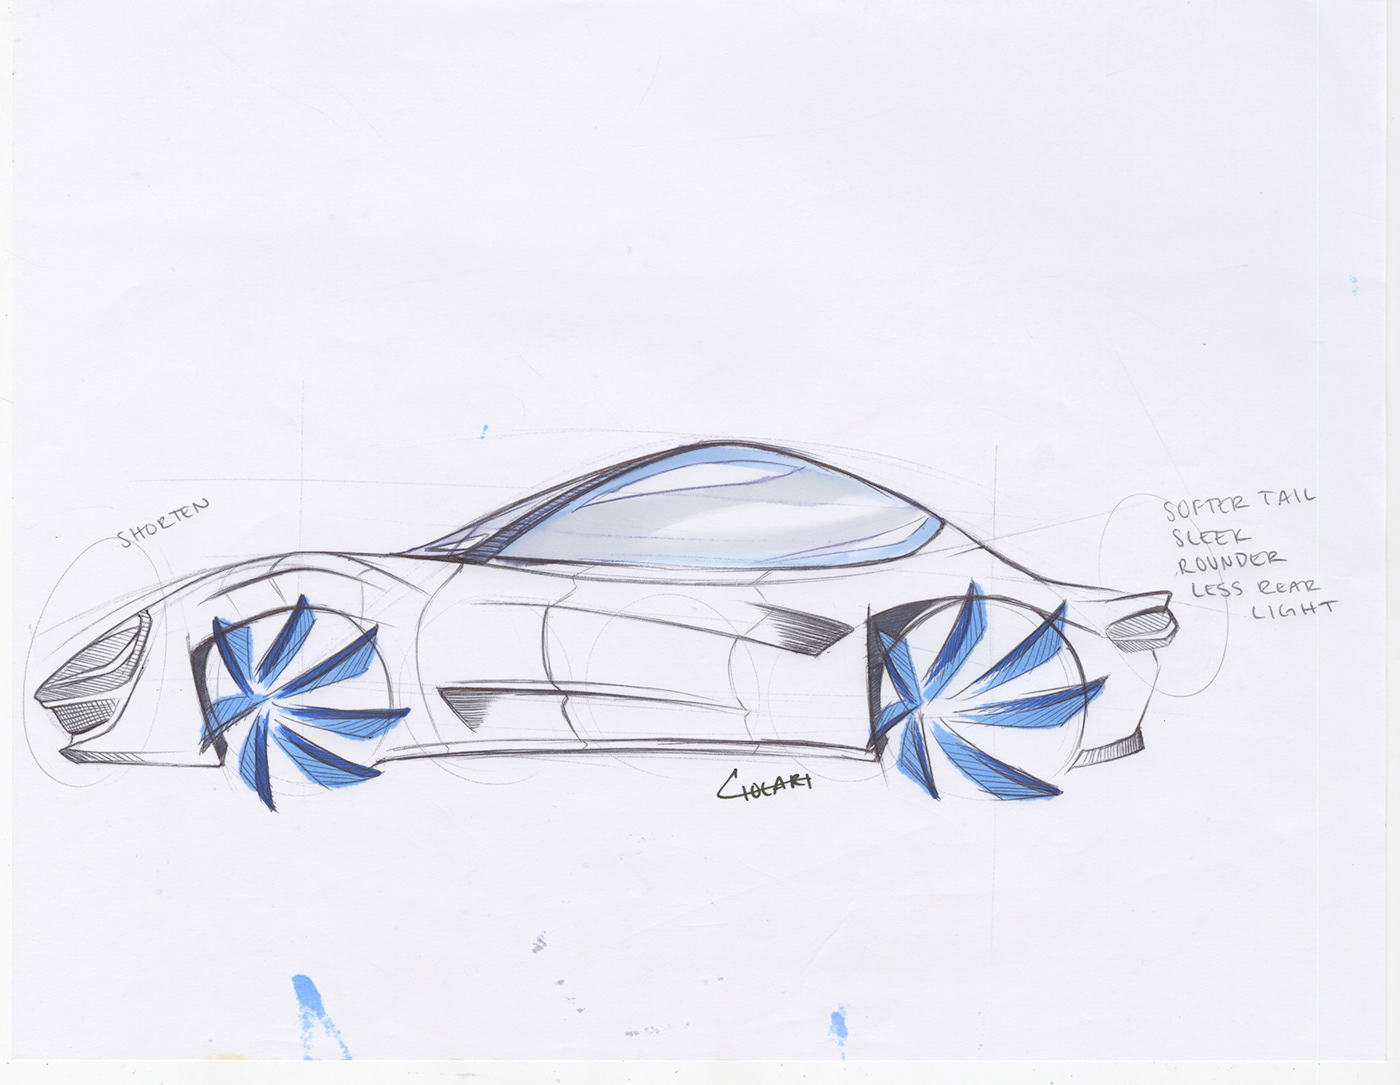 car drawing car sketching vehicle exploration car design Automotive design